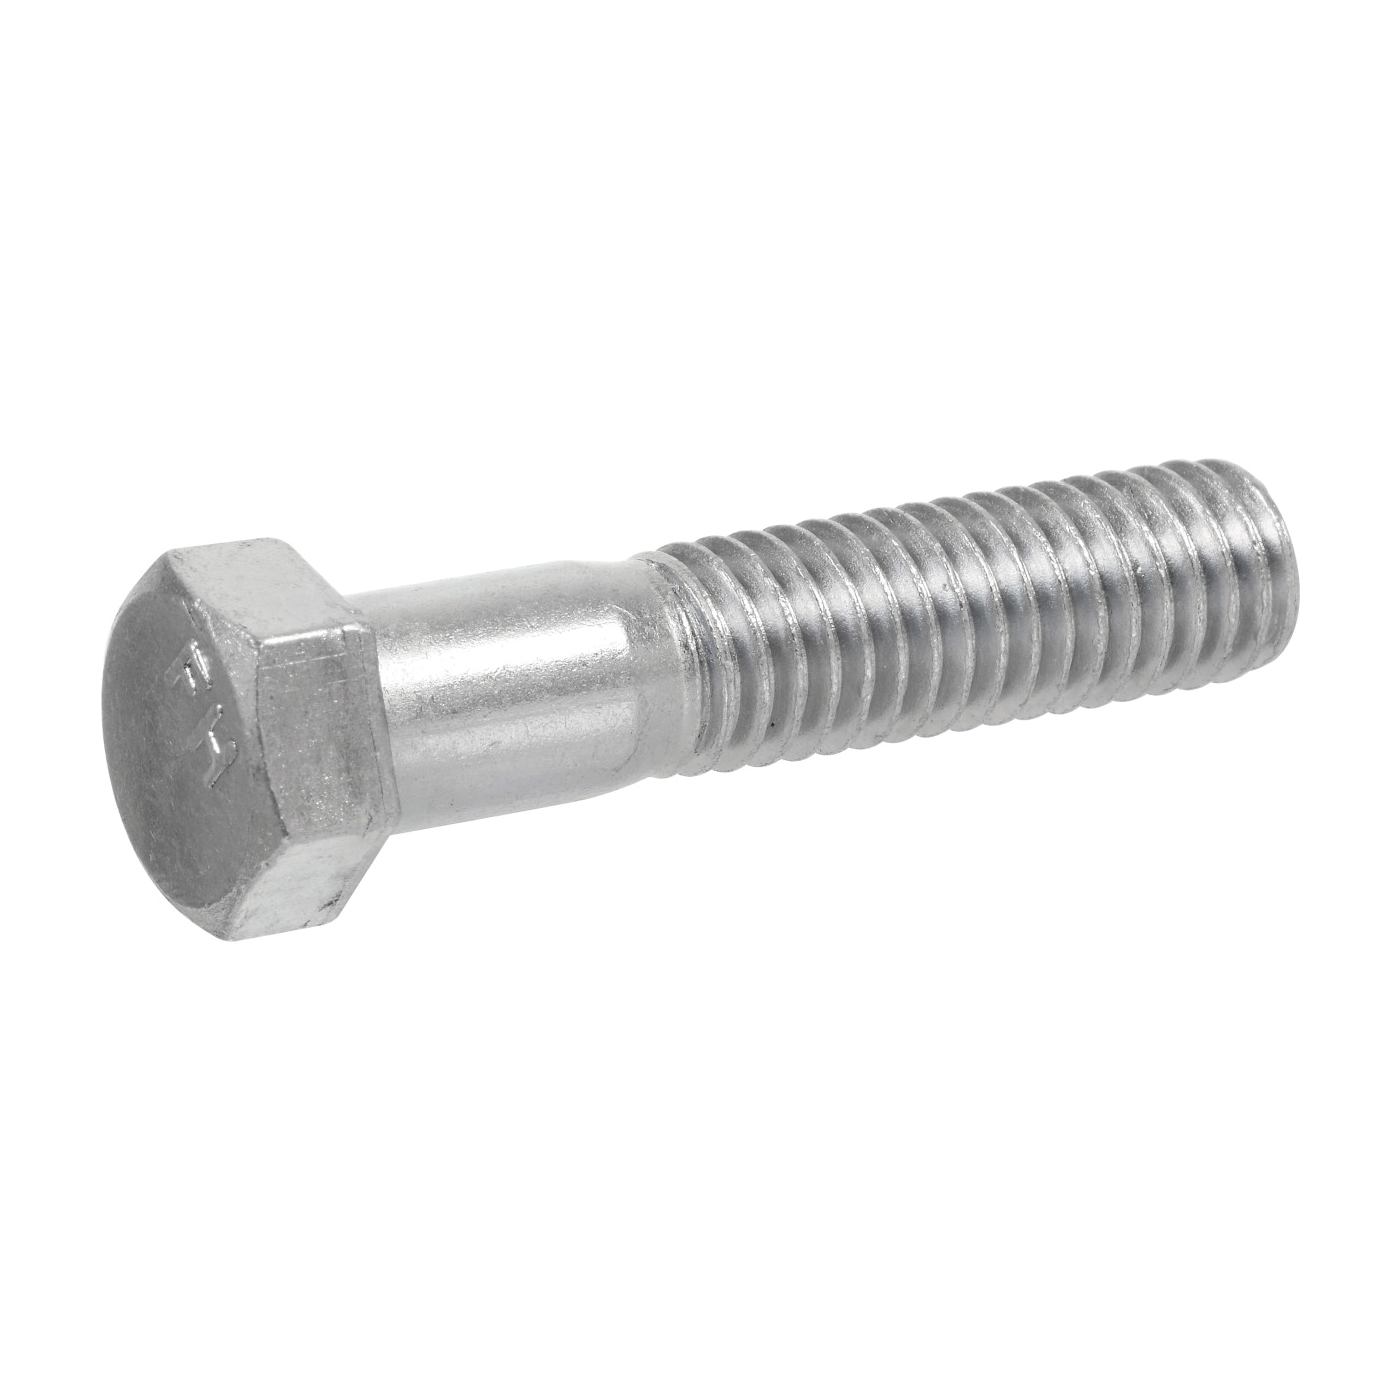 880667 Hex Bolt, M7-1 Thread, 20 mm OAL, 8.8 Grade, Steel, Zinc-Plated, Metric Measuring, Fine Thread